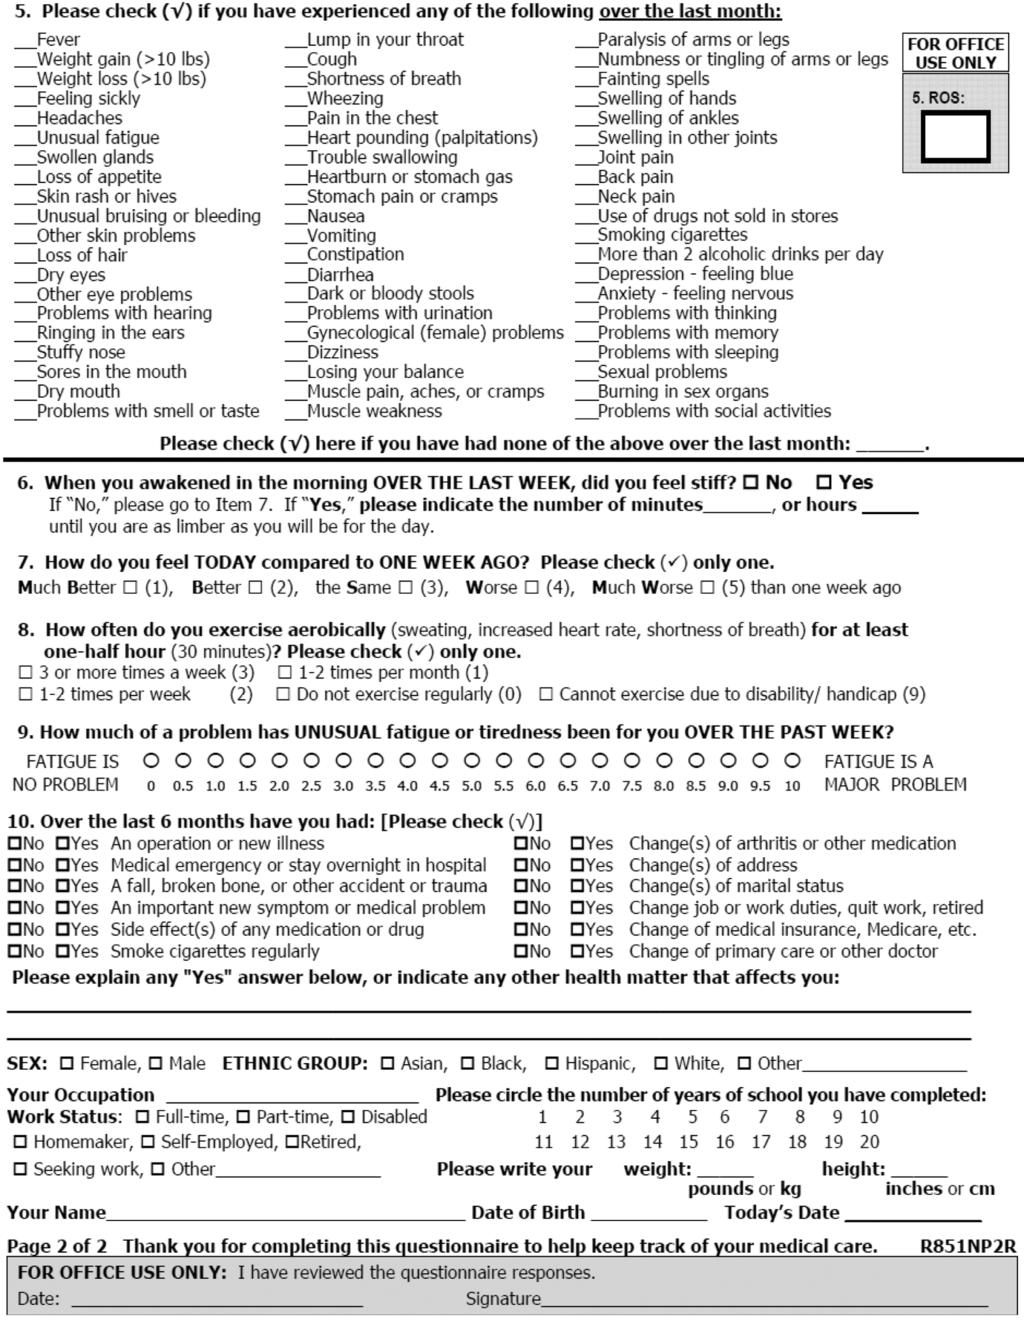 S32 B Figure 1 Multidimensional health assessment questionnaire (MDHAQ).